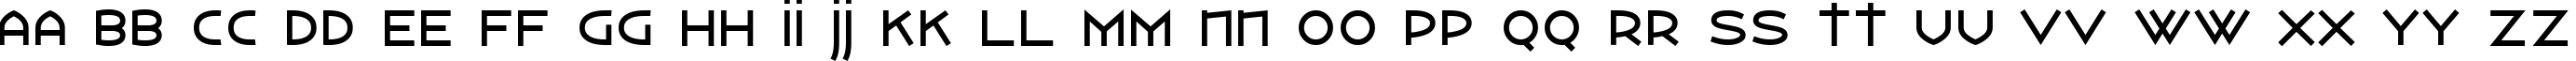 Пример написания английского алфавита шрифтом Watertown Bold